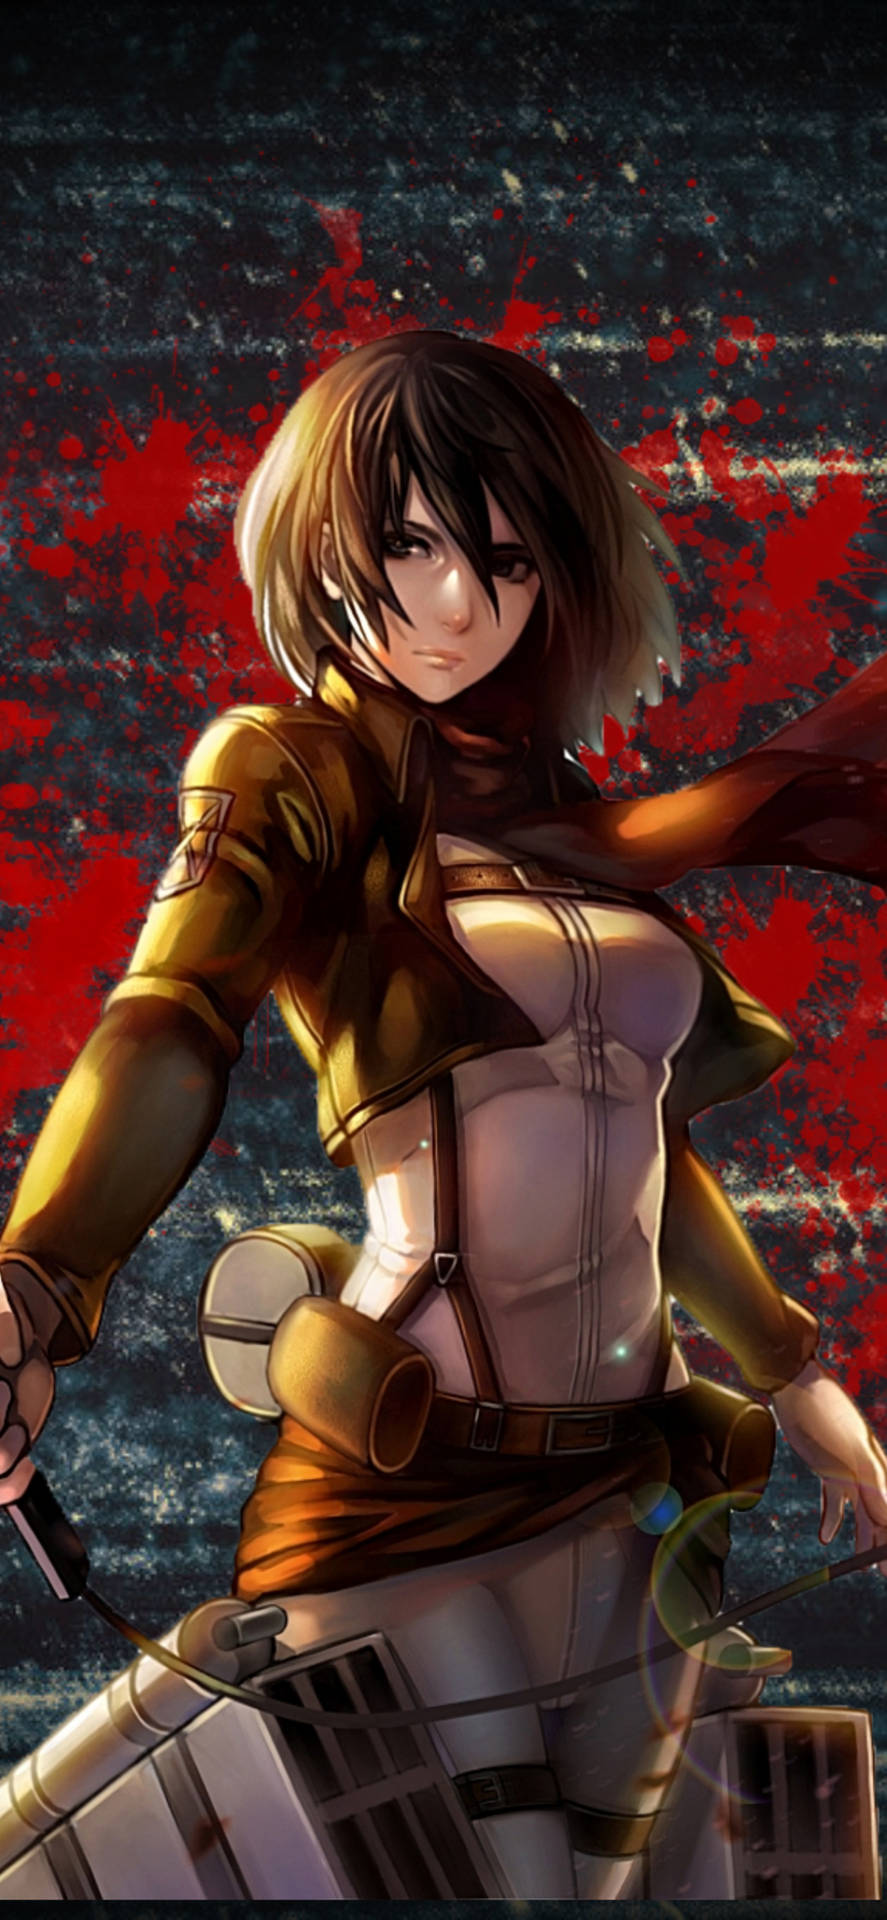 Mikasa Portrait Attack On Titan iPhone Wallpaper